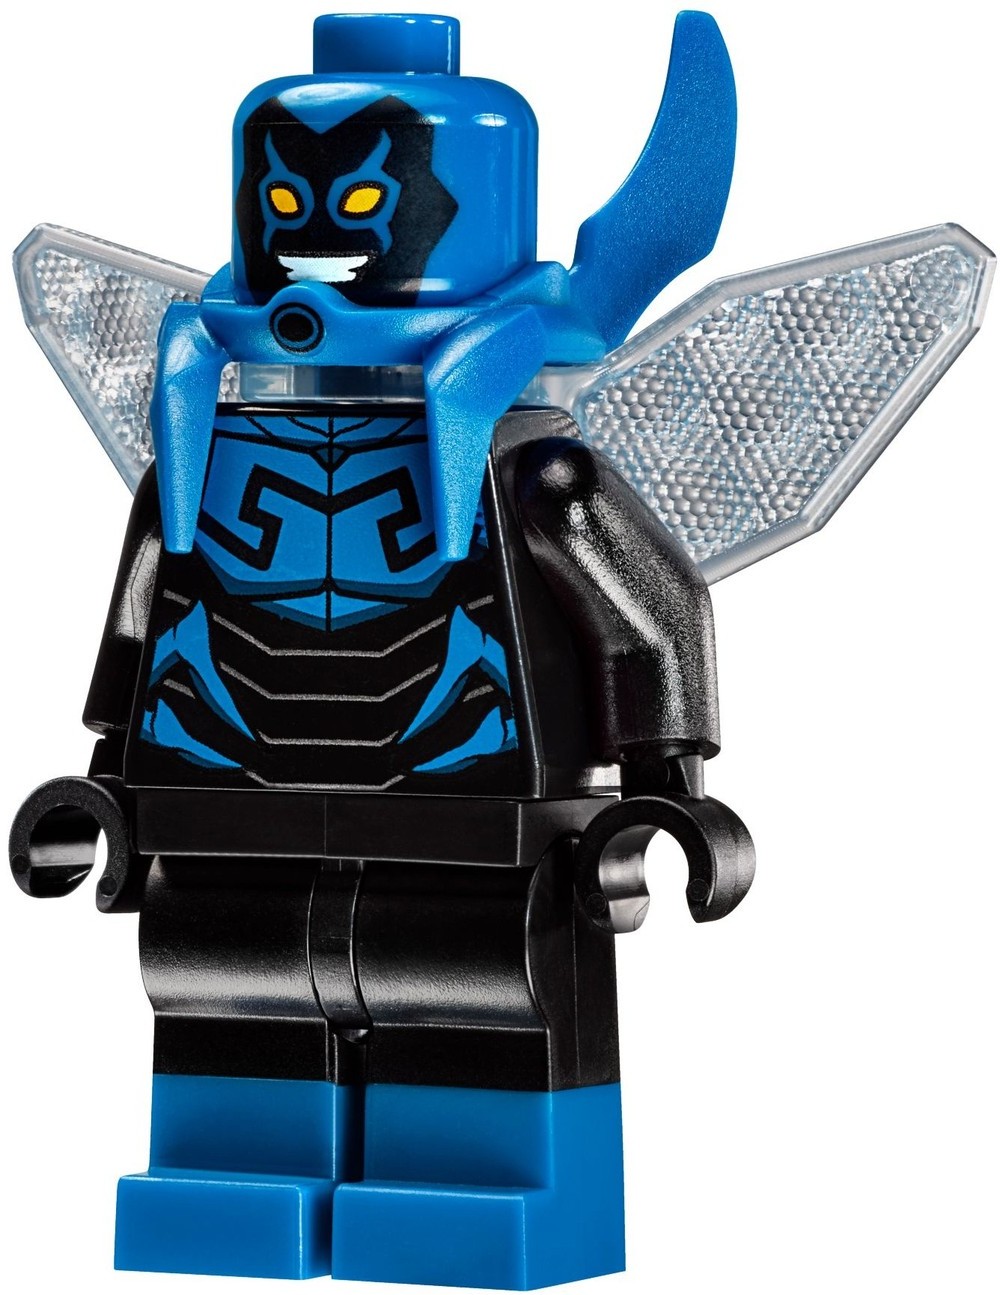 Krypto Come Home achievement in LEGO Batman 3: Beyond Gotham